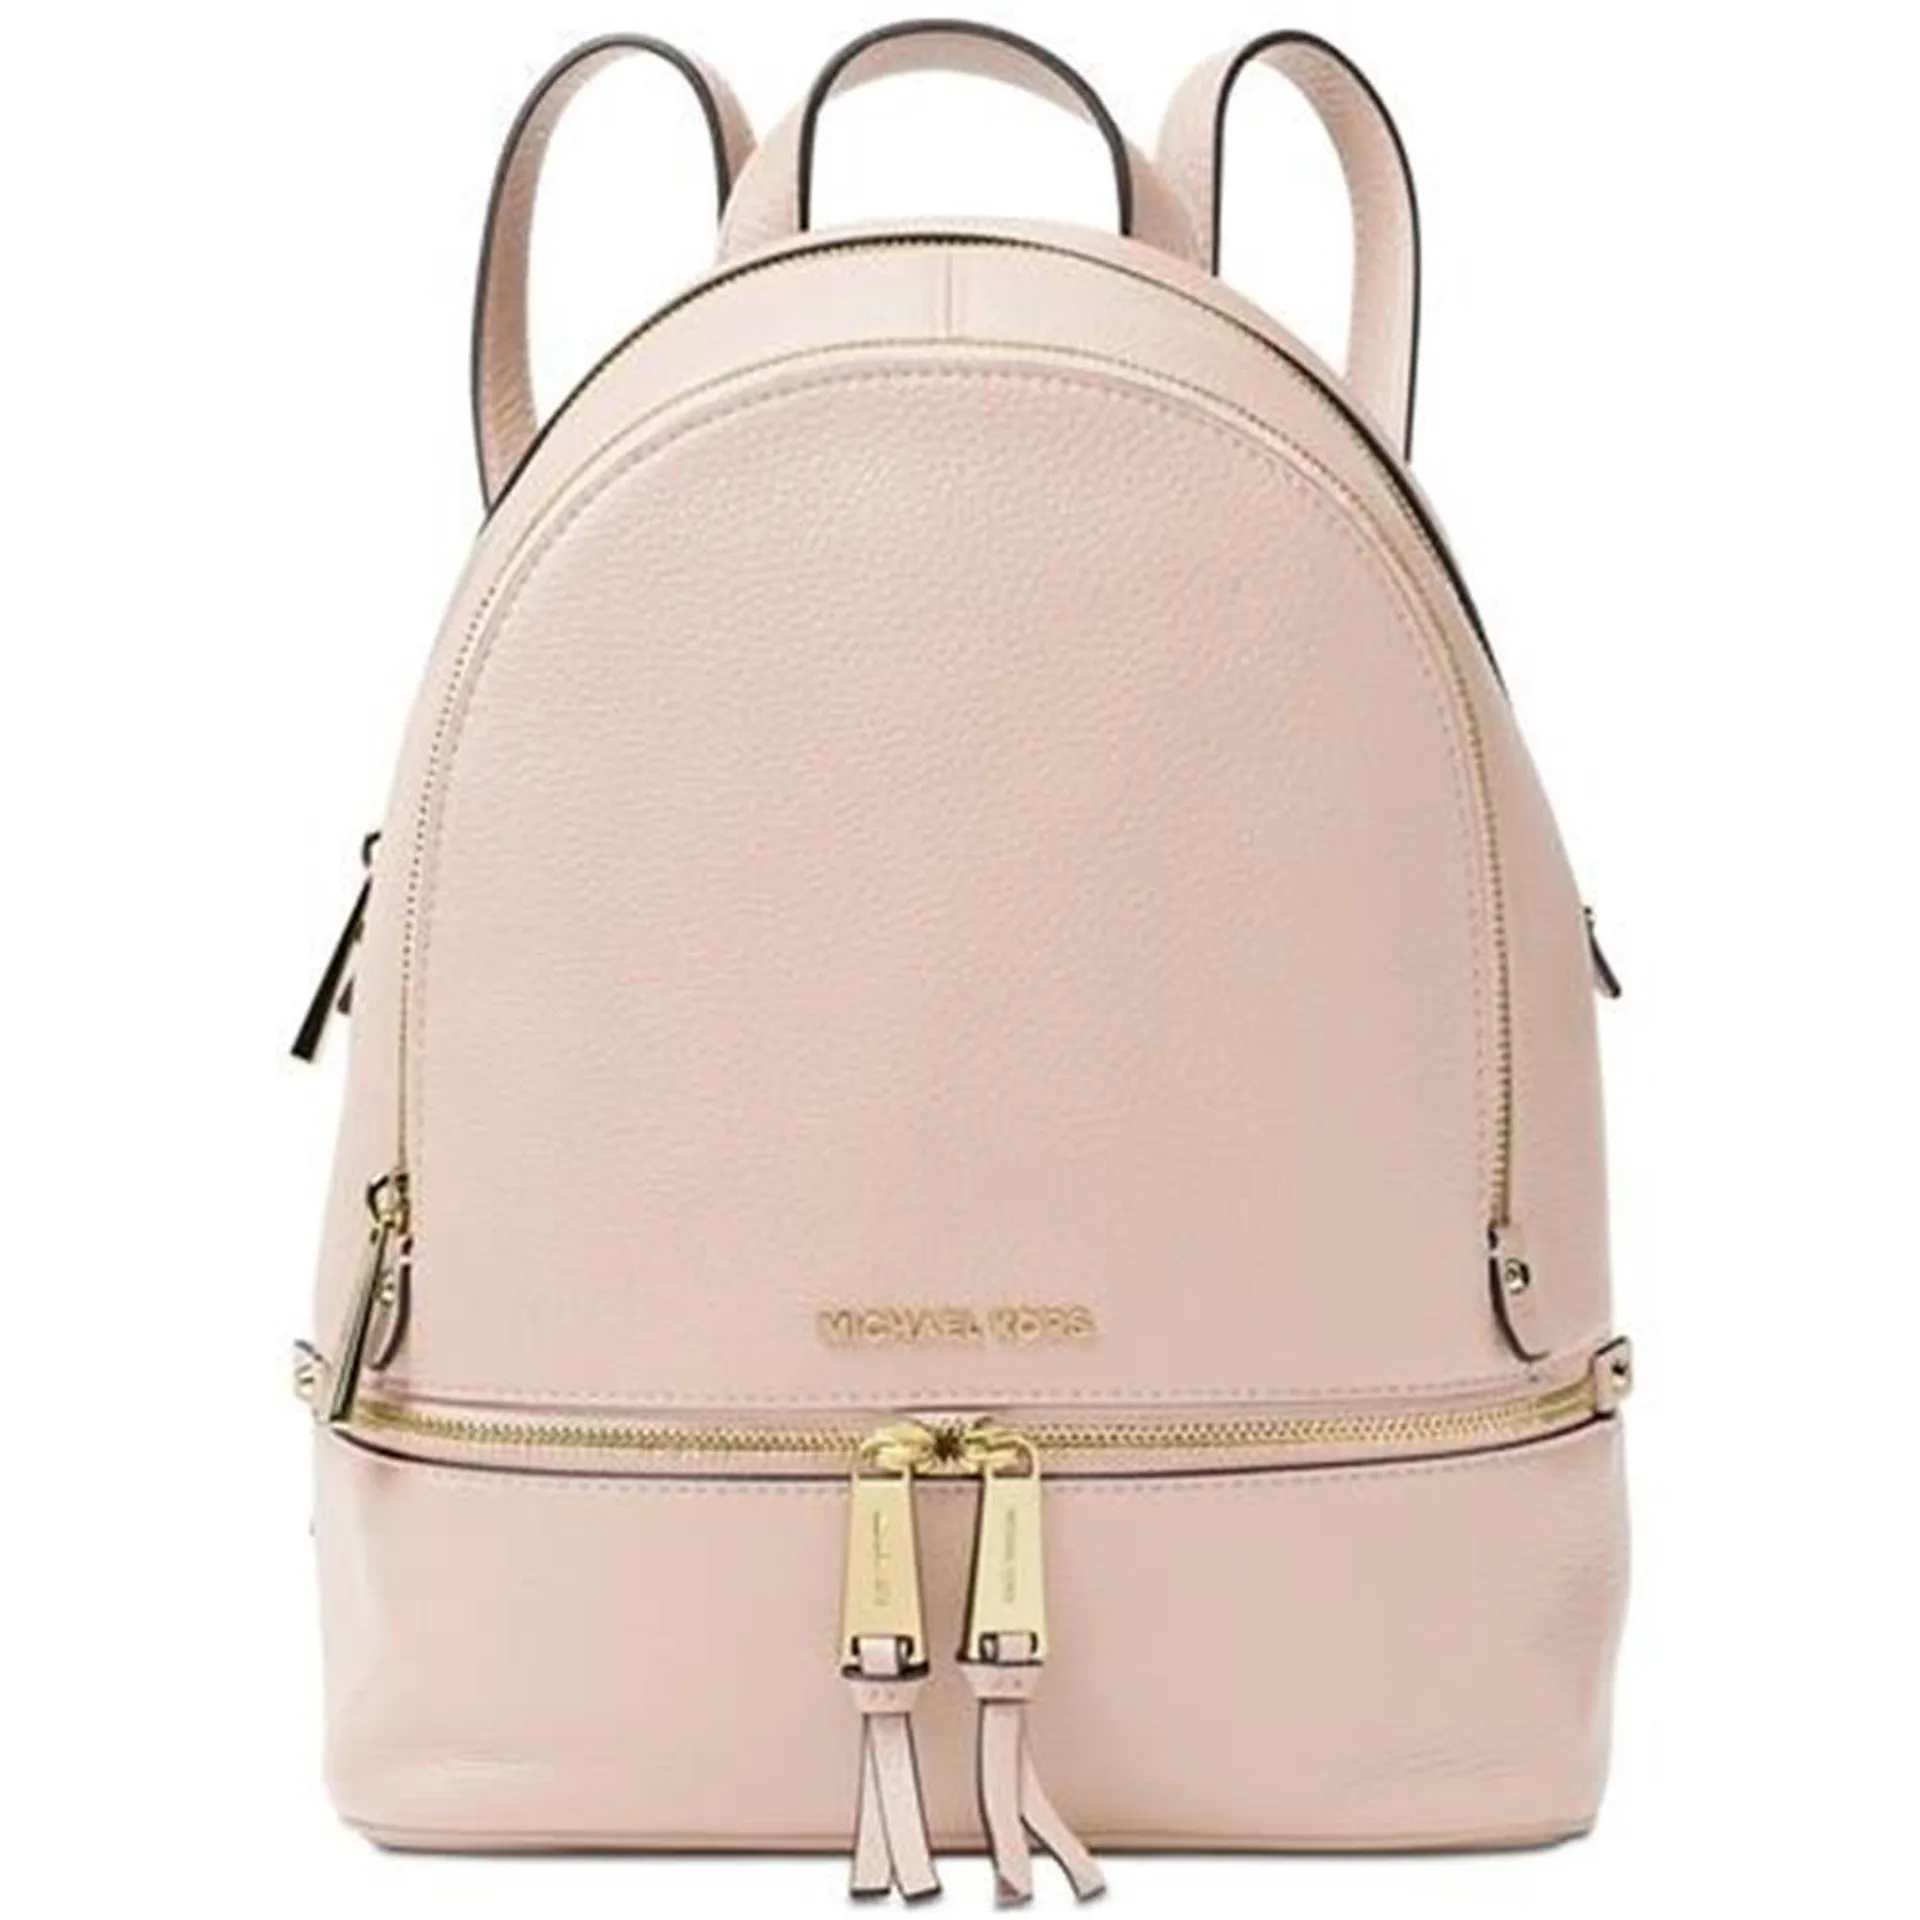 Brooklyn Medium Pebbled Leather Backpack - Soft Pink